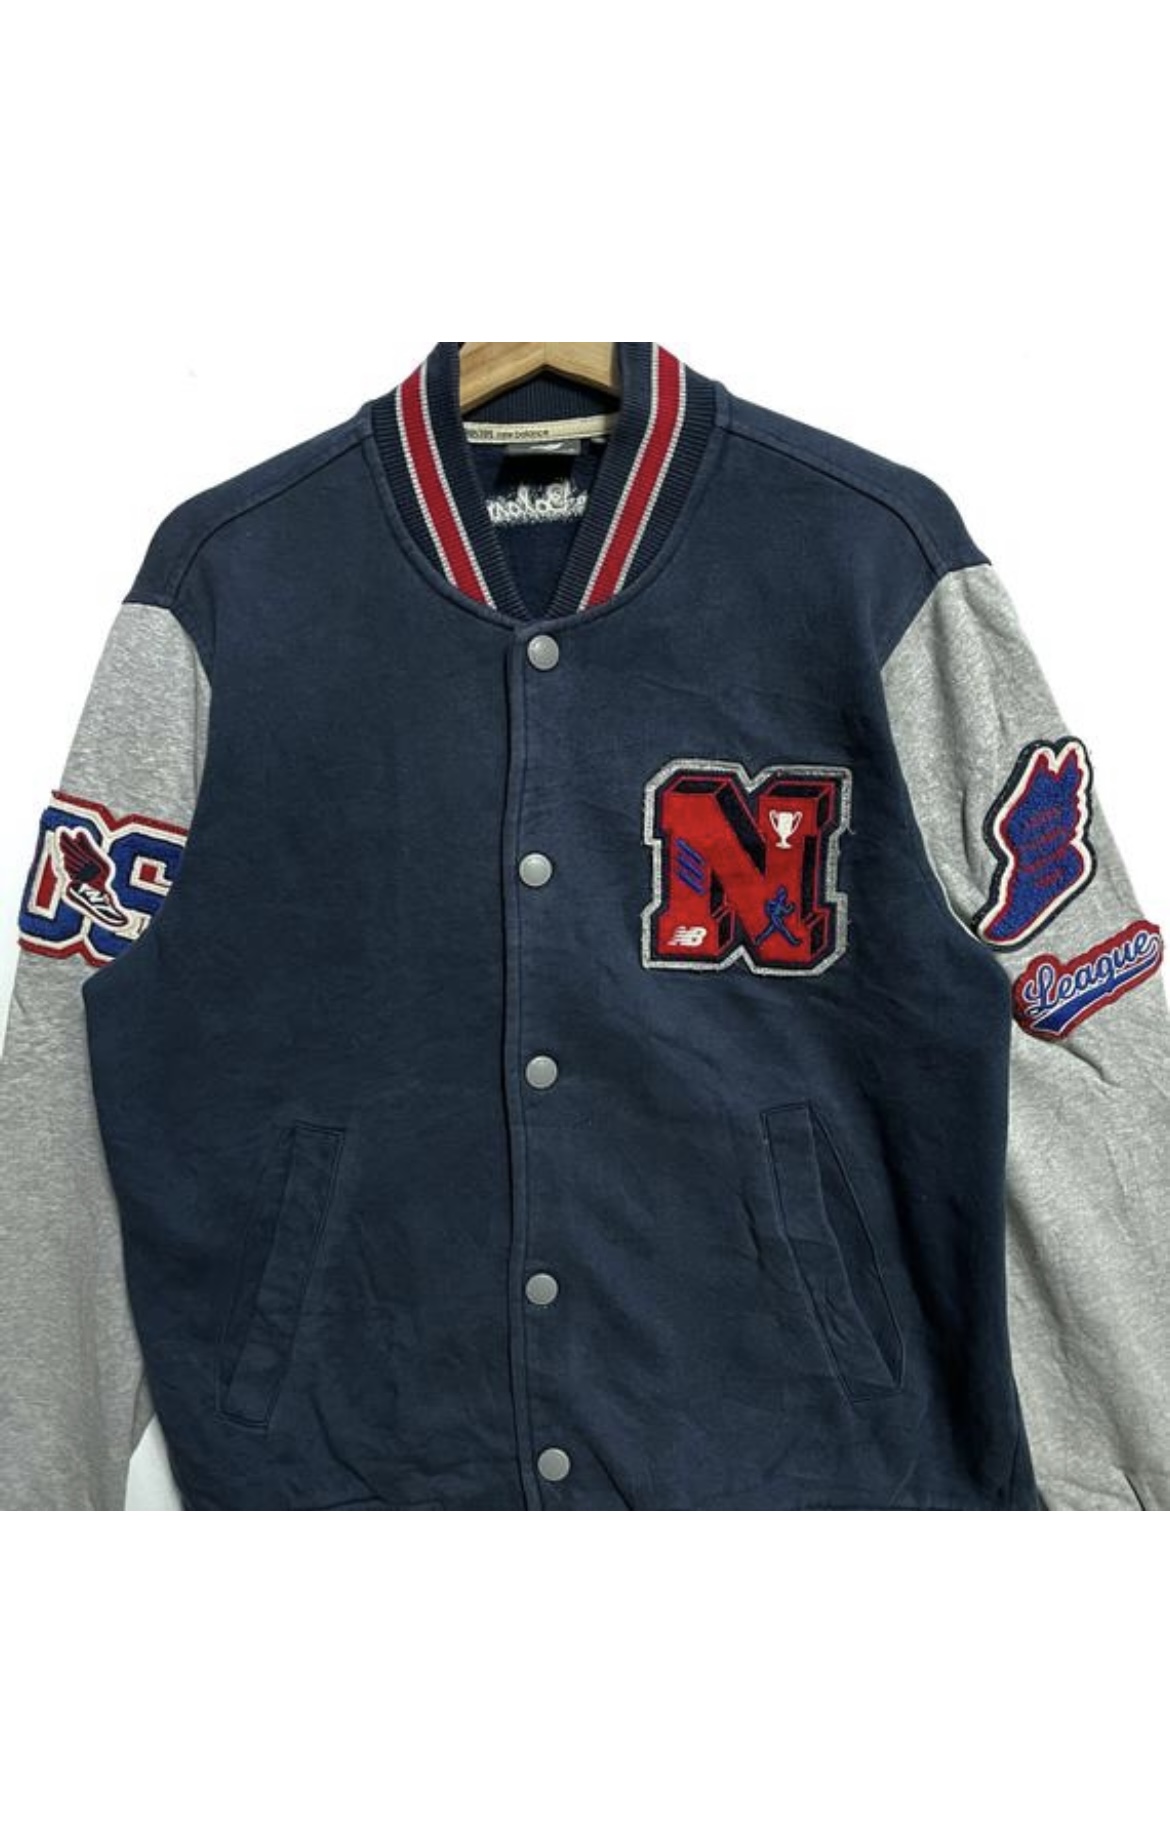 Vintage New Balance x Boston Varsity Jacket 90s Mlb Size L - 5